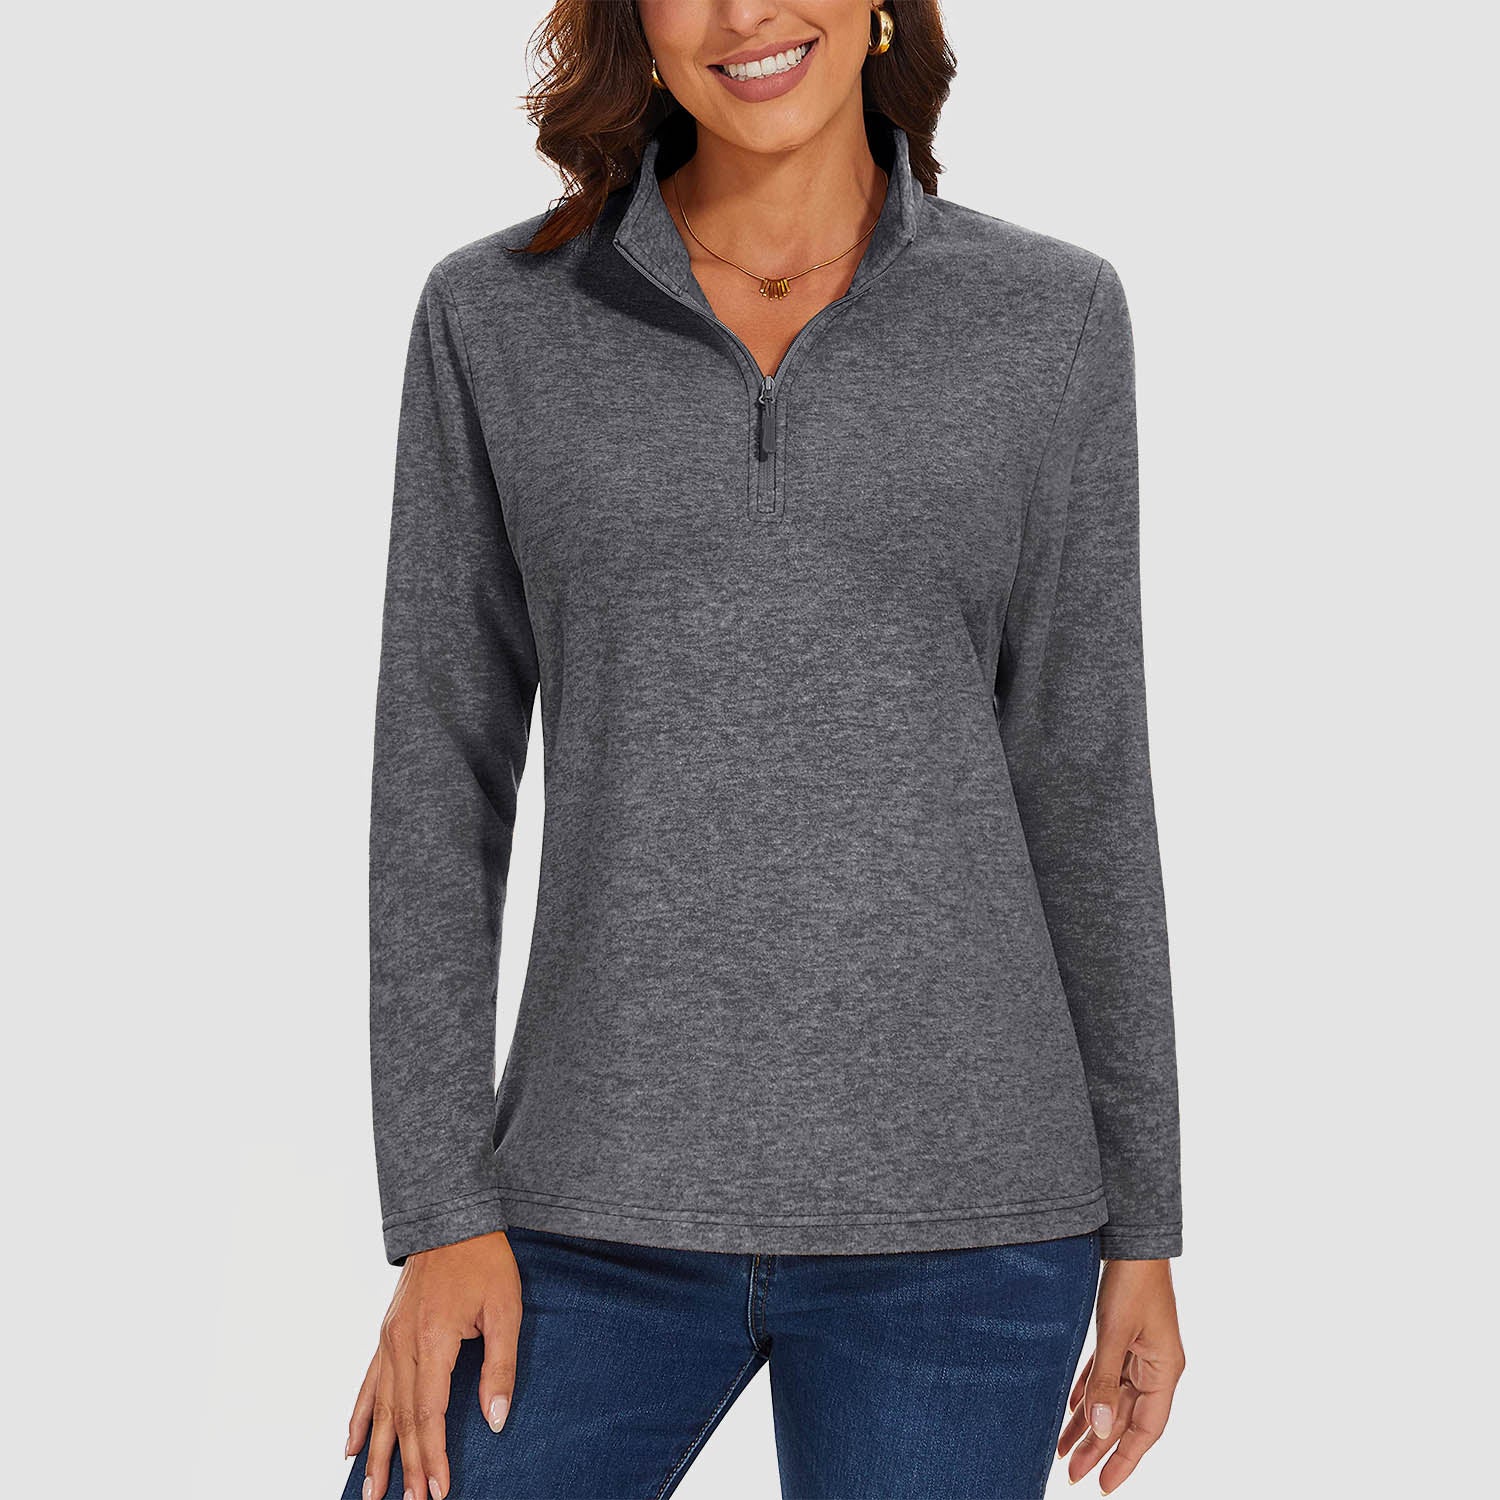 Womens Quarter Zip Pullover Long Sleeve Fleece Shirts Sweatshirt Athletic Top